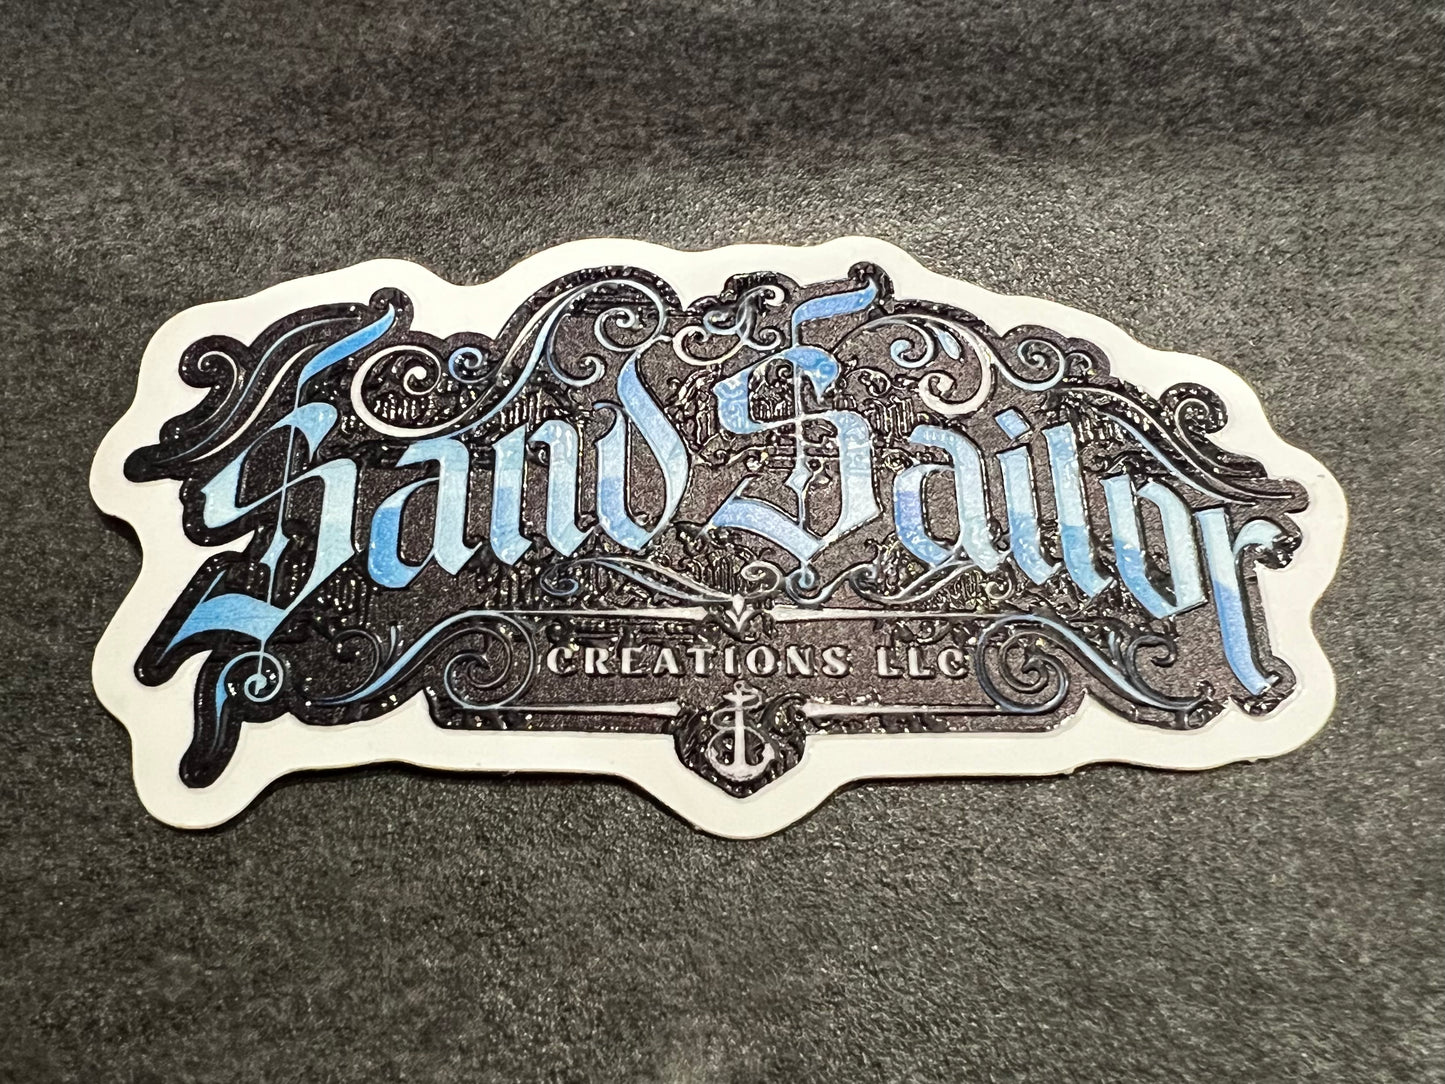 Sand Sailor Creations LLC Sticker